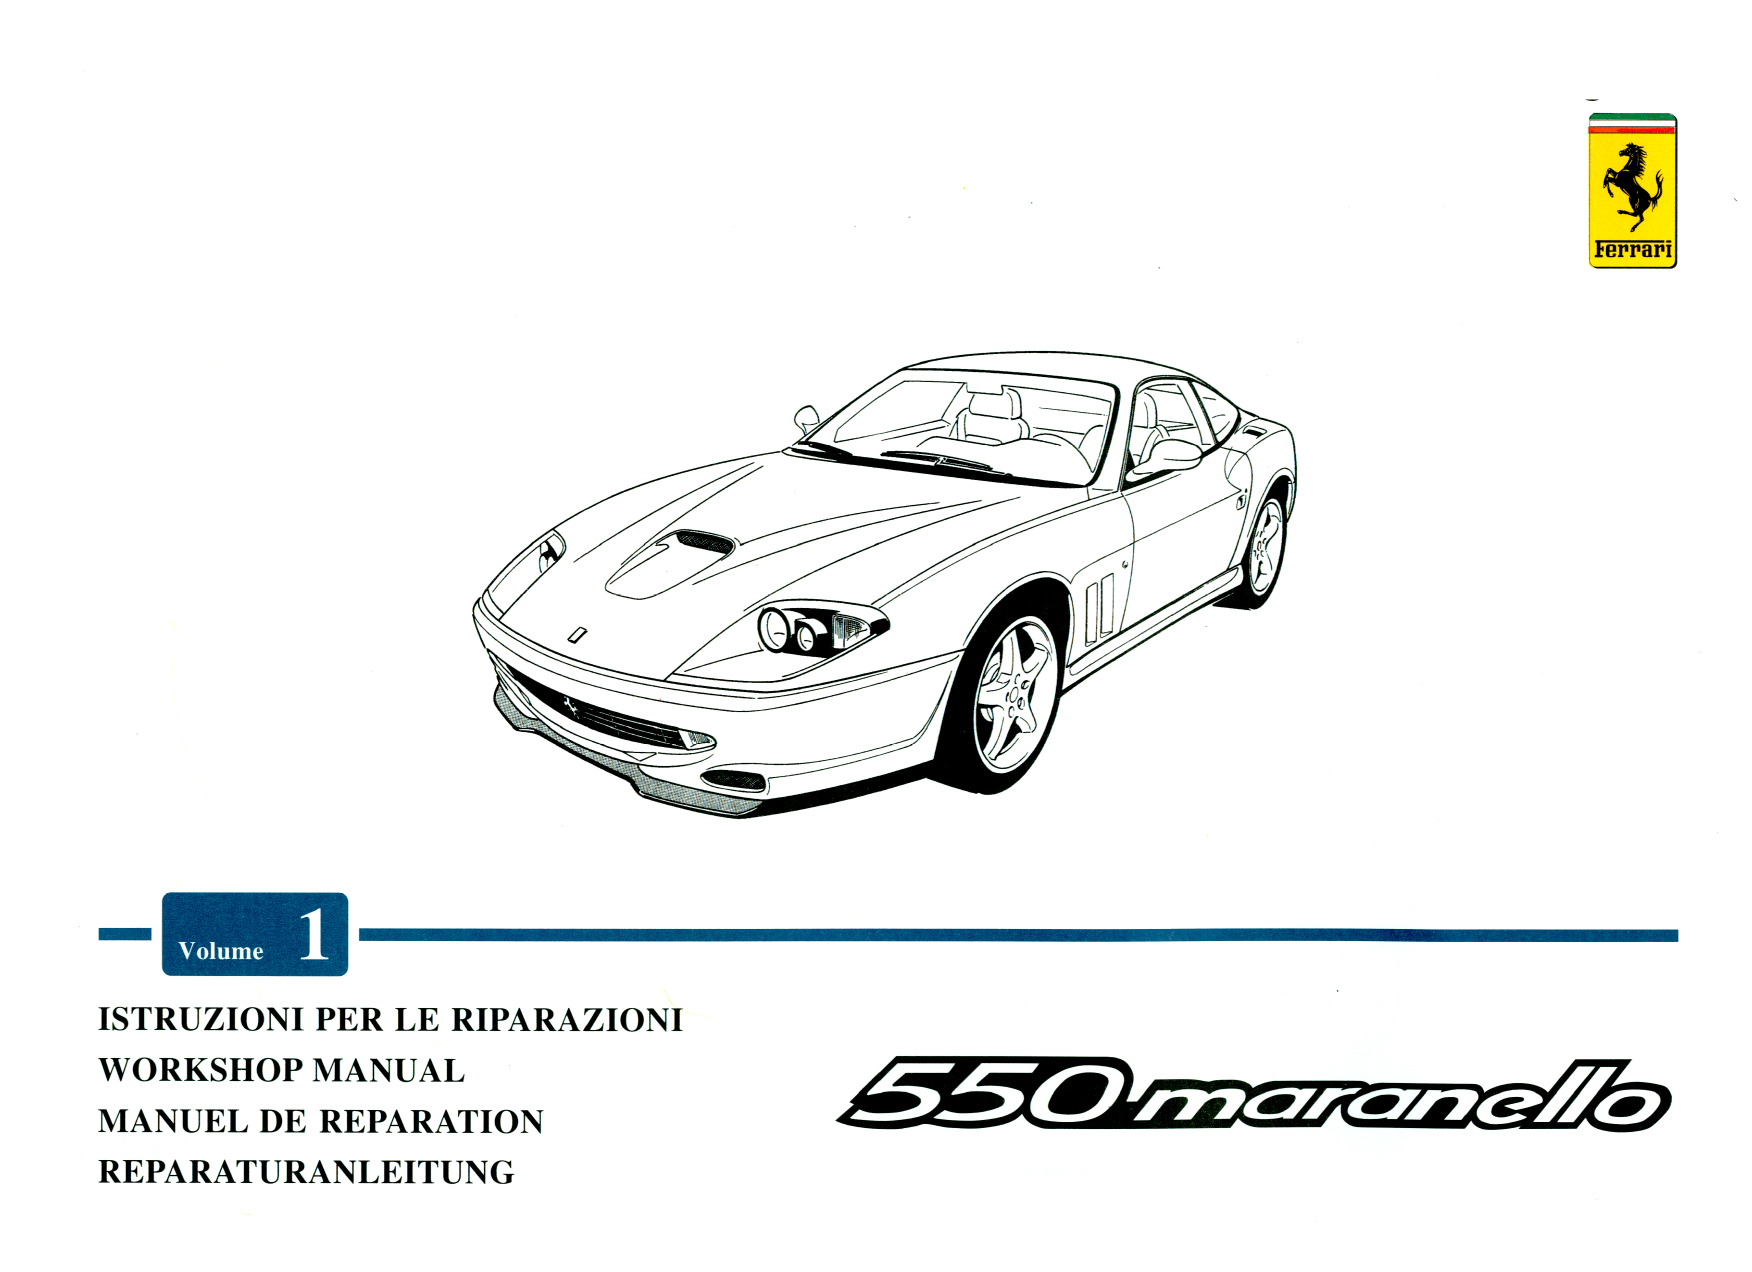 1996-2001 Ferrari 550 Maranello workshop manual Preview image 3